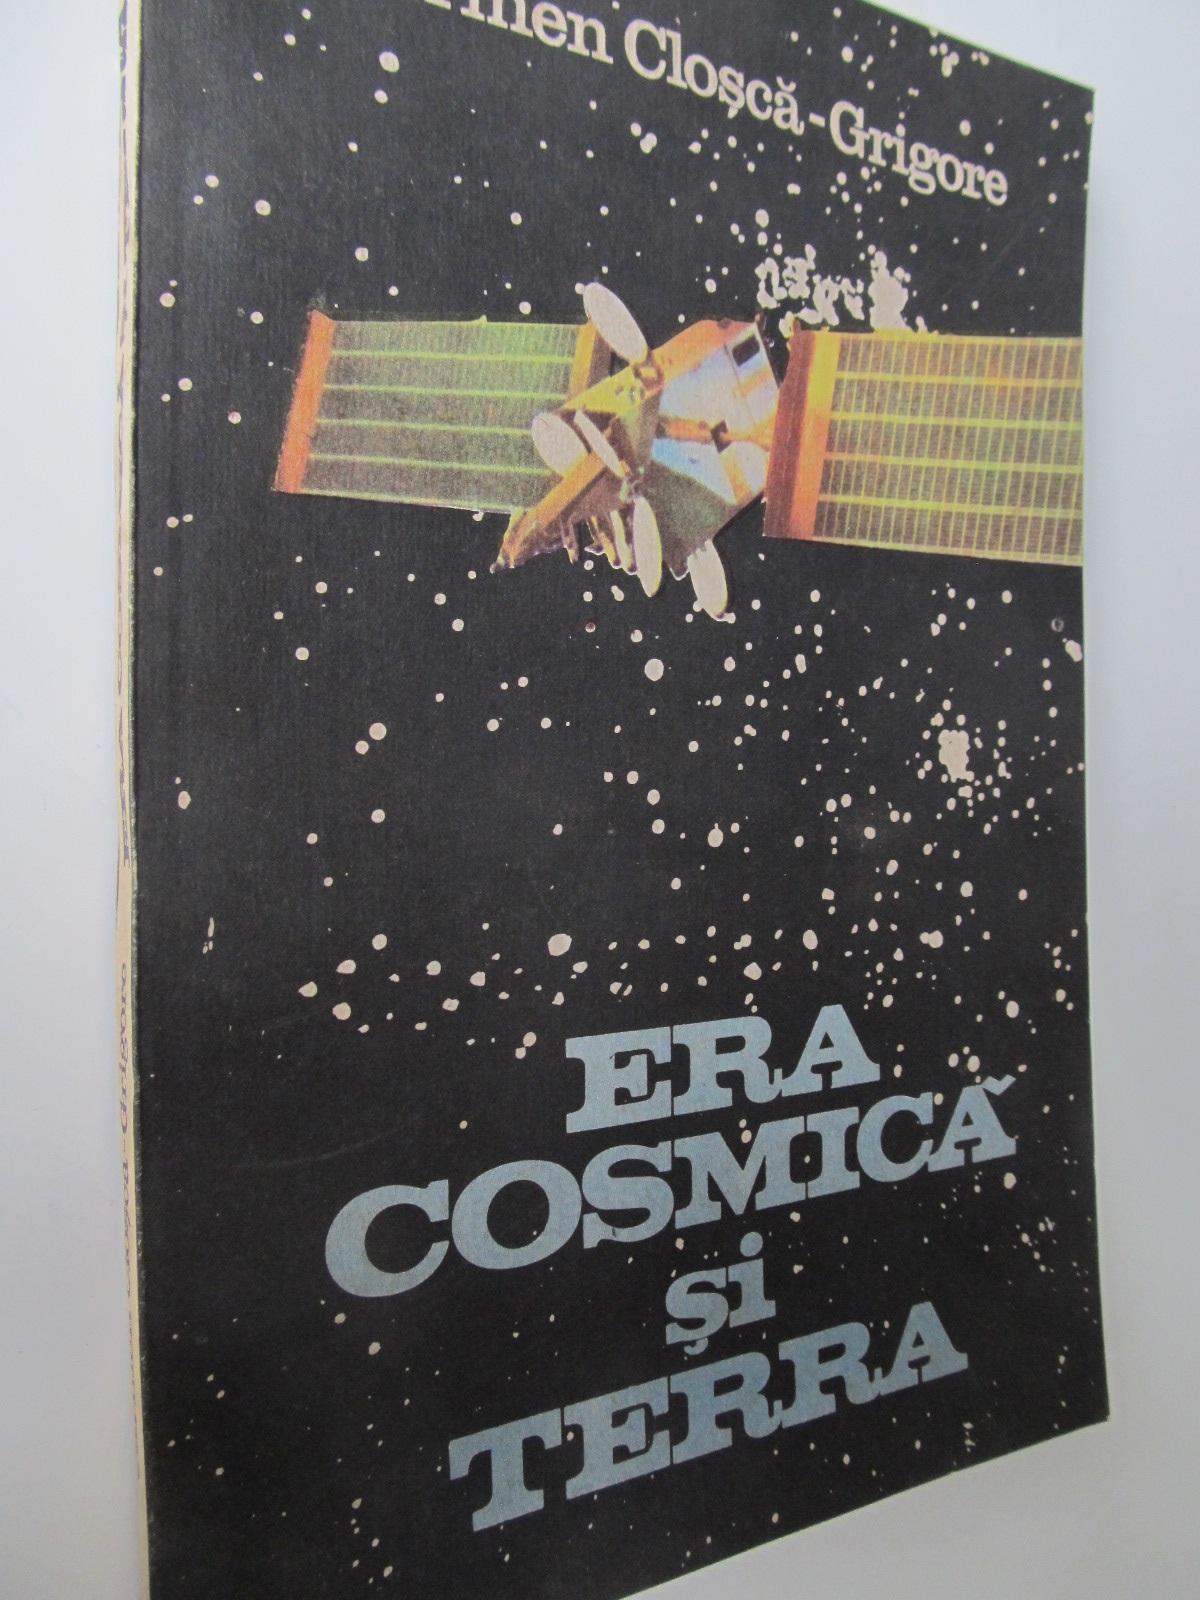 Era cosmica si Terra - Carmen Closca Grigore | Detalii carte